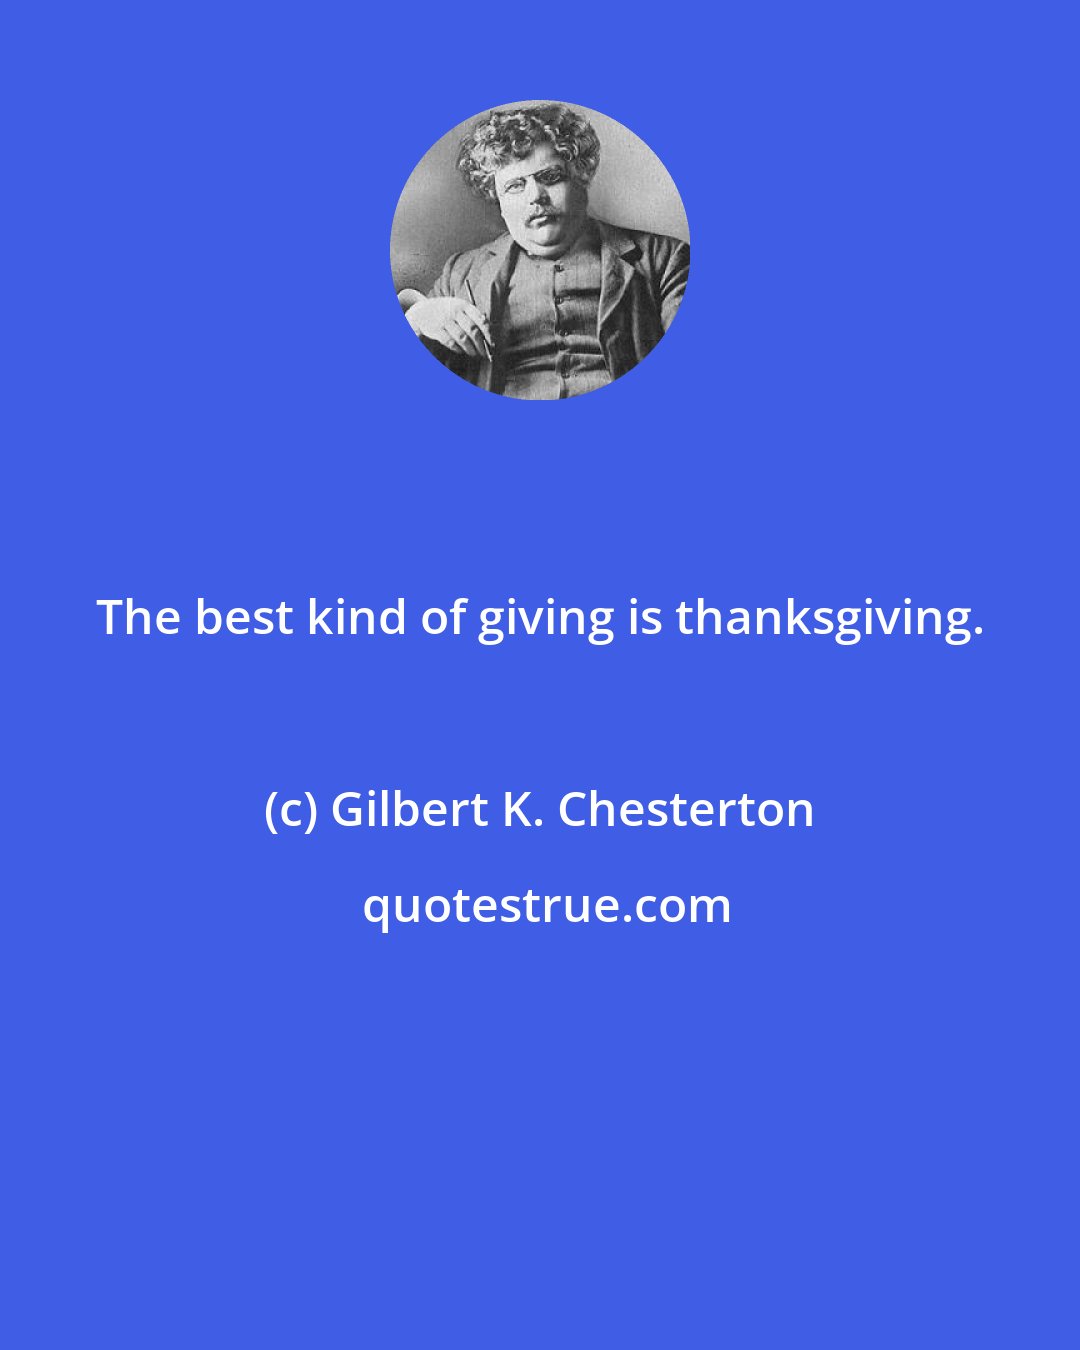 Gilbert K. Chesterton: The best kind of giving is thanksgiving.